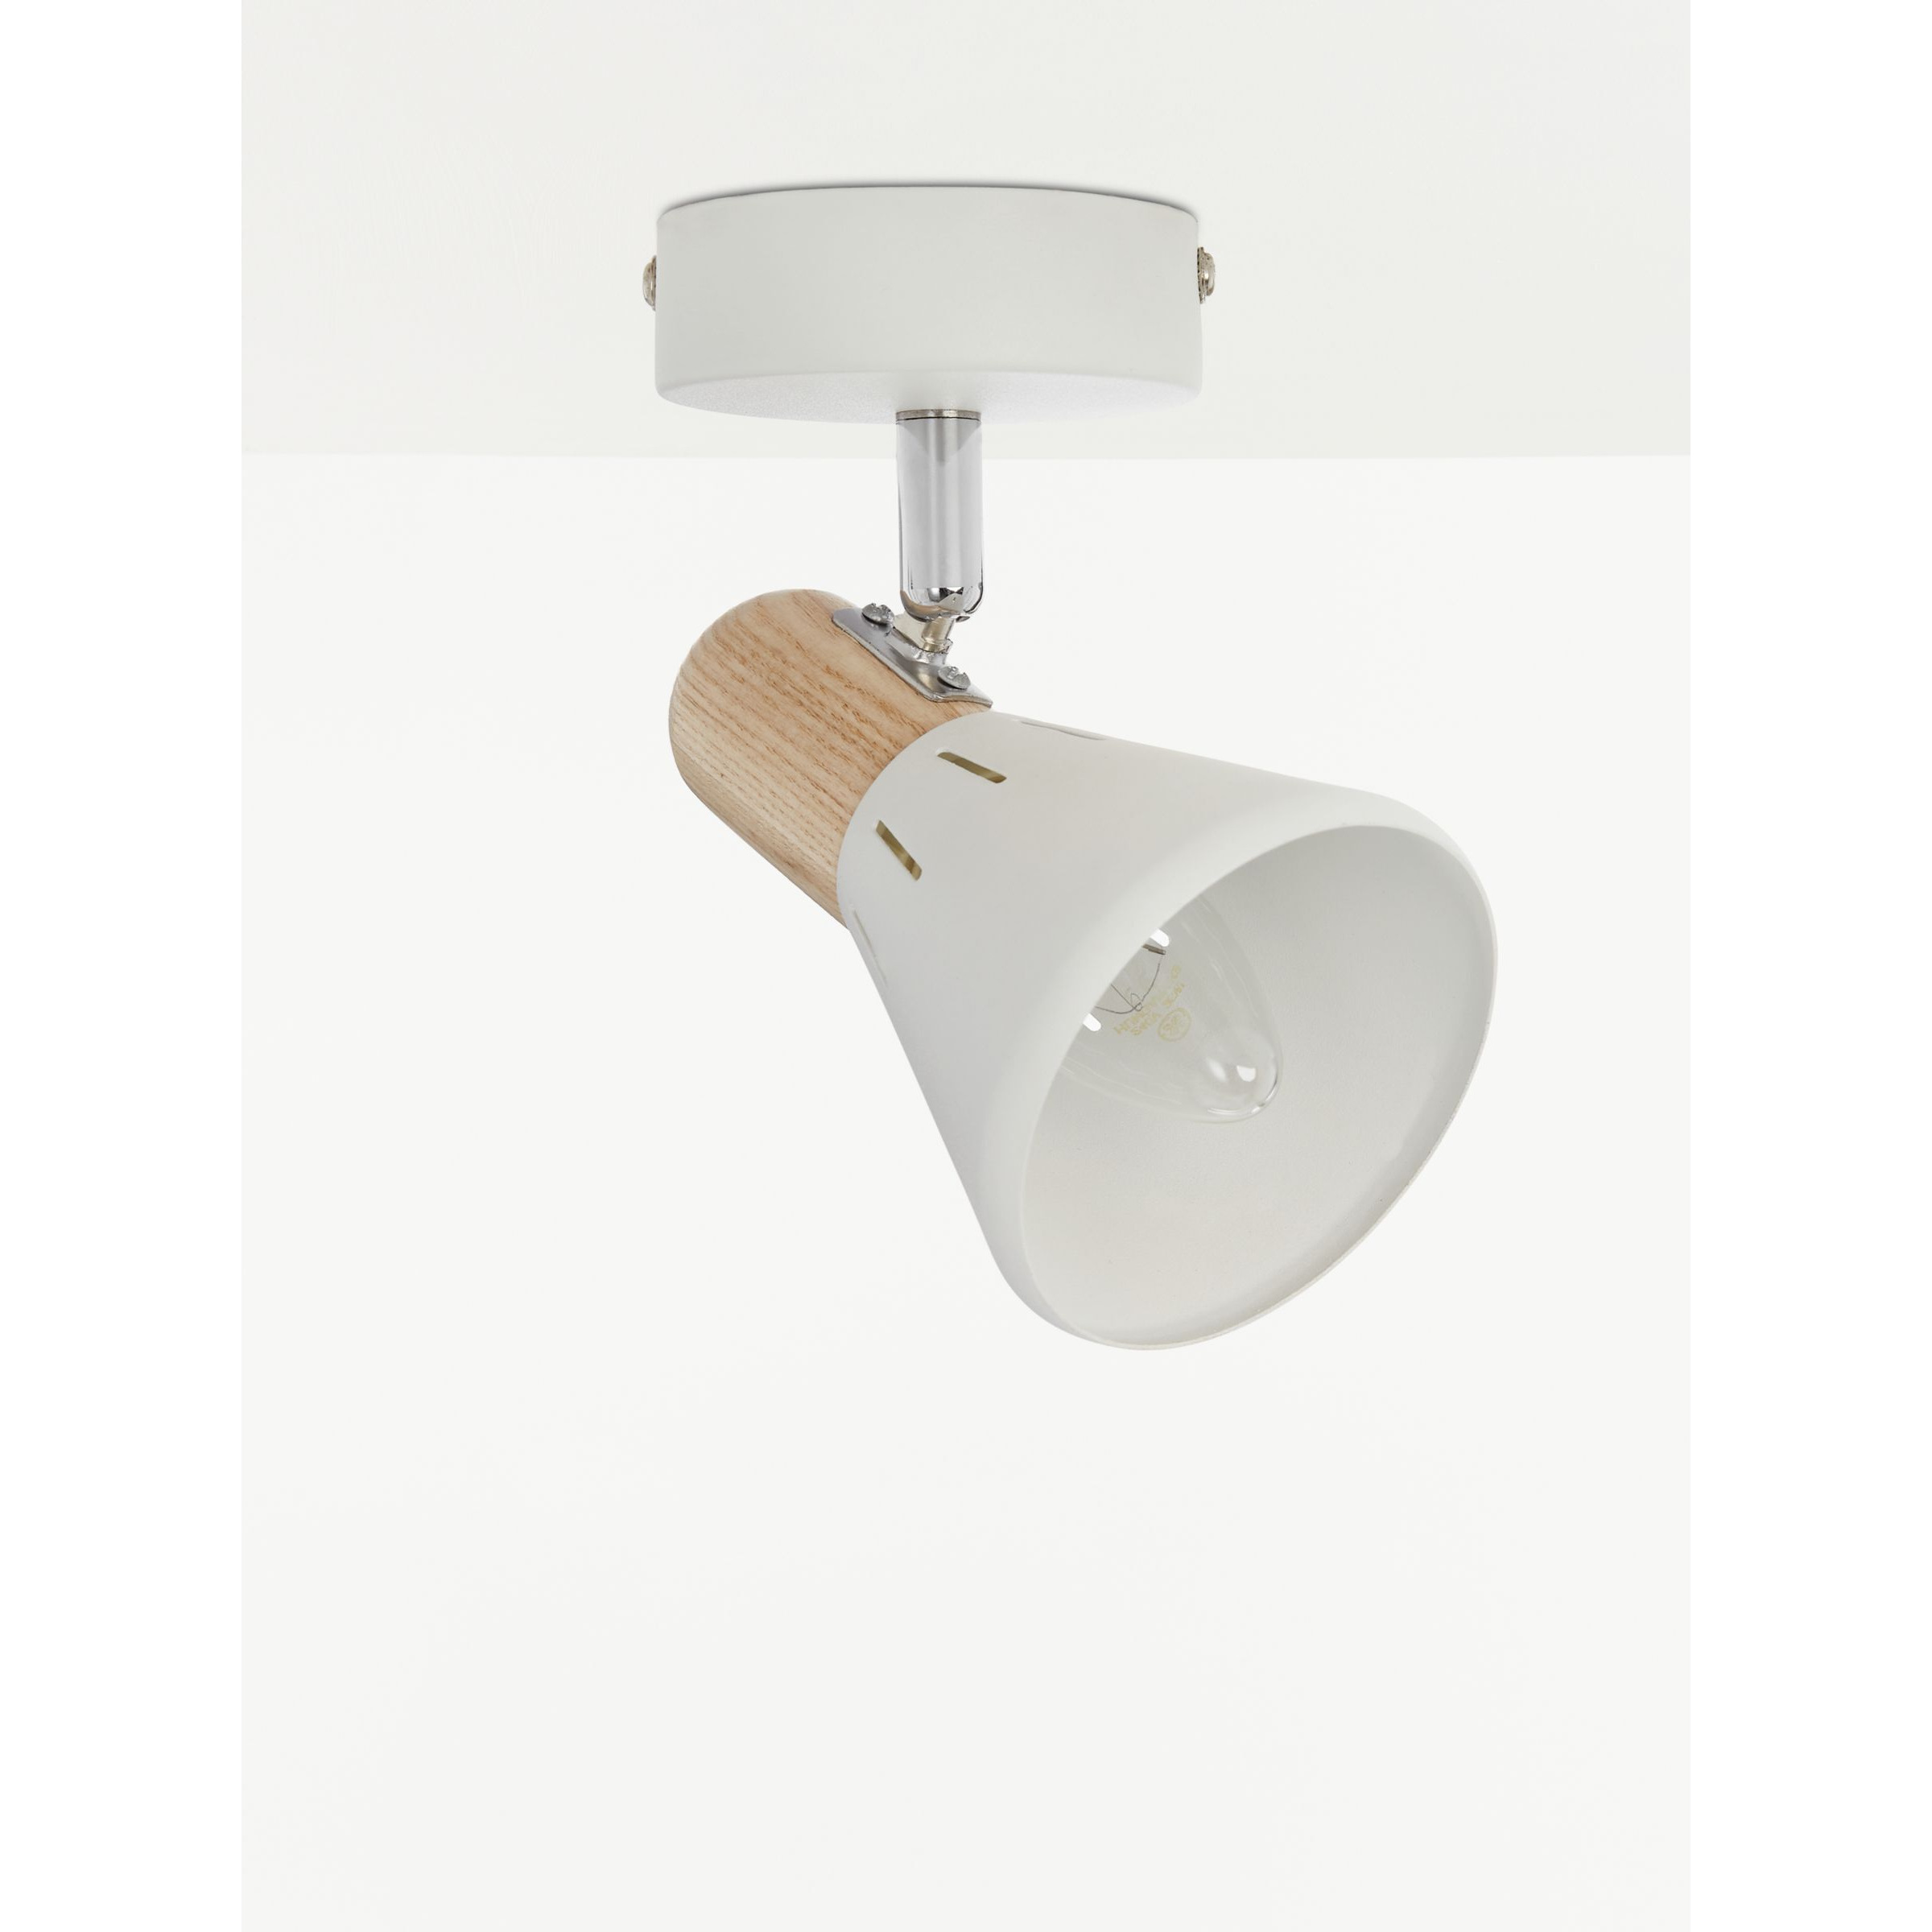 John Lewis SES LED Single Spotlight, White/Wood - image 1